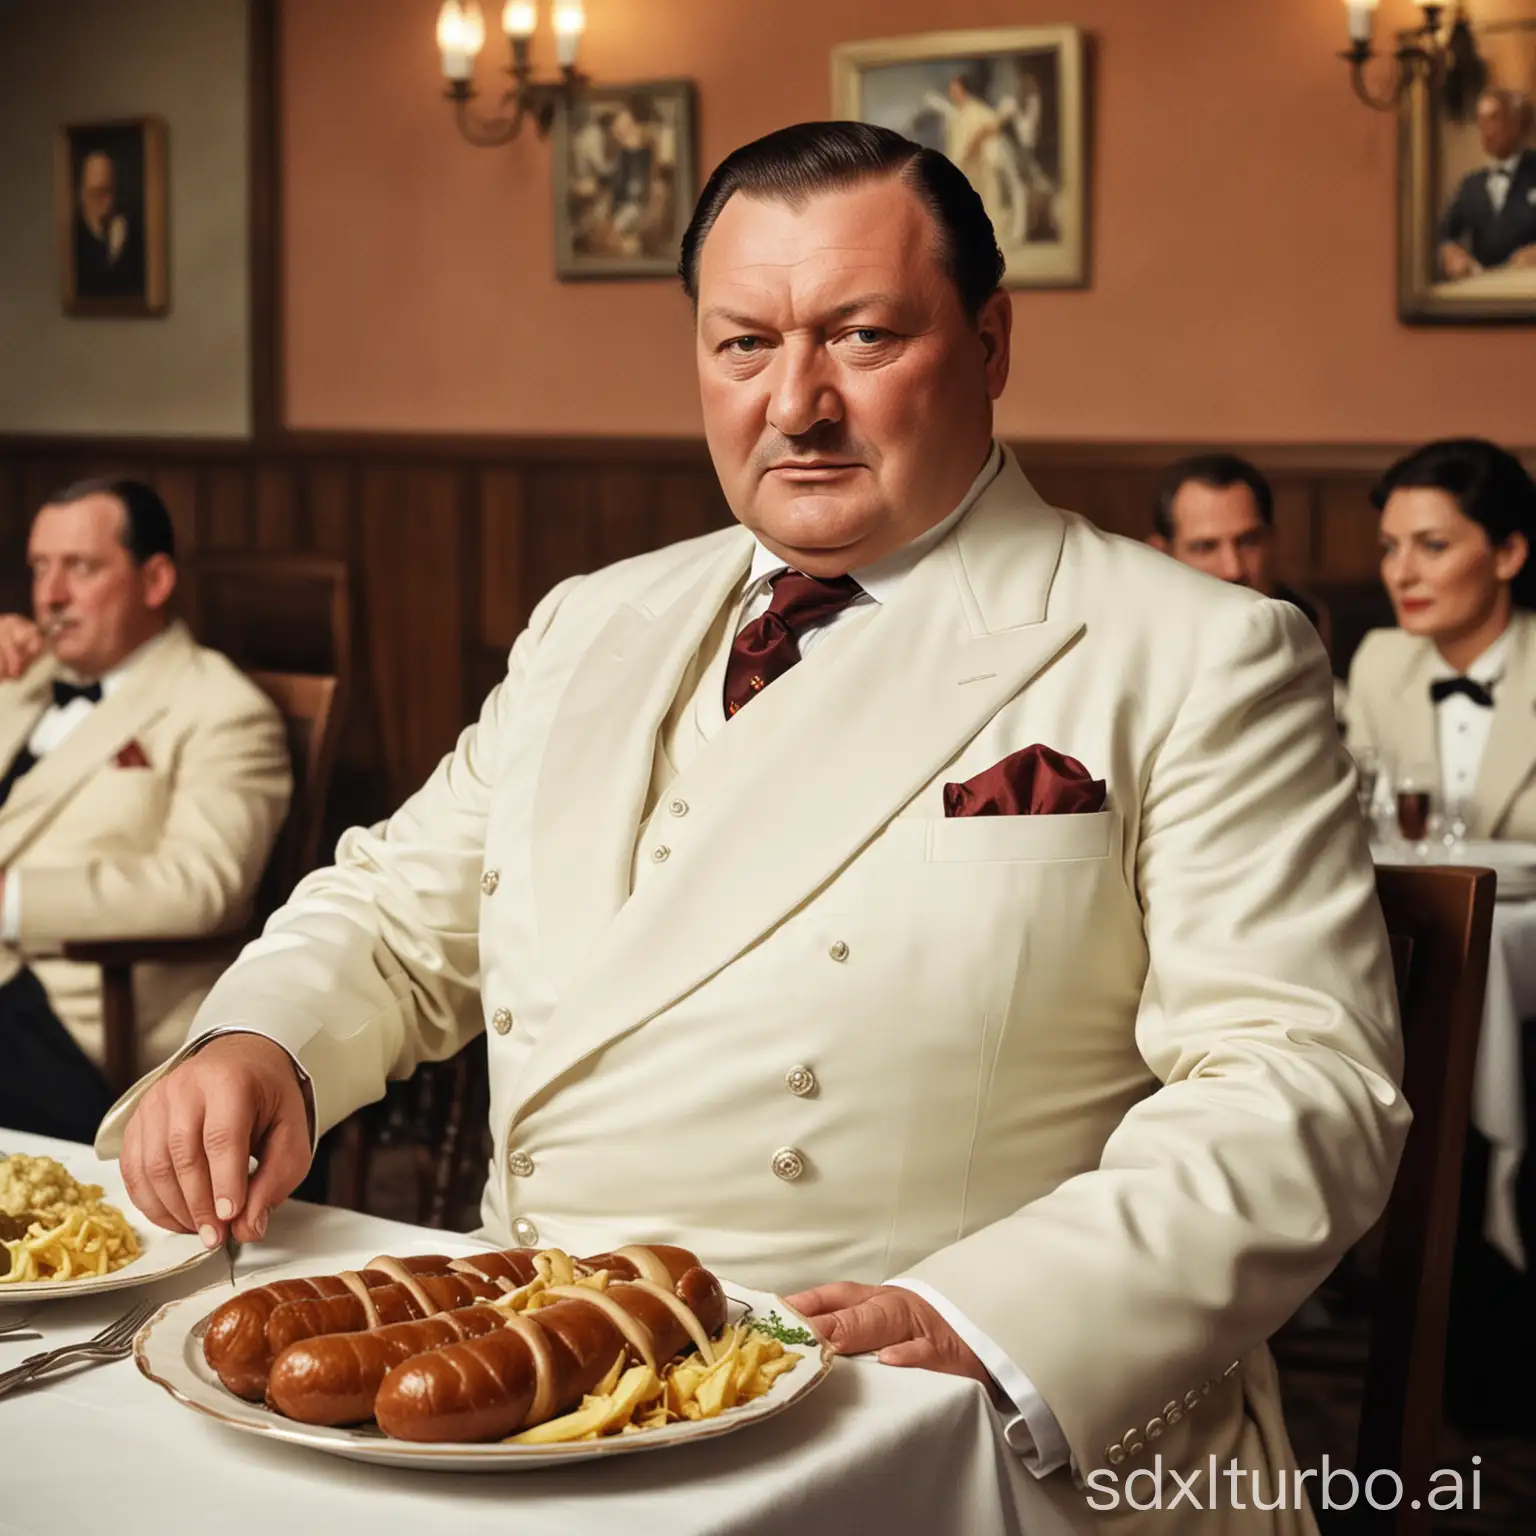 Vintage-Photo-Hermann-Gring-in-White-Tuxedo-at-German-Restaurant-with-Bratwurst